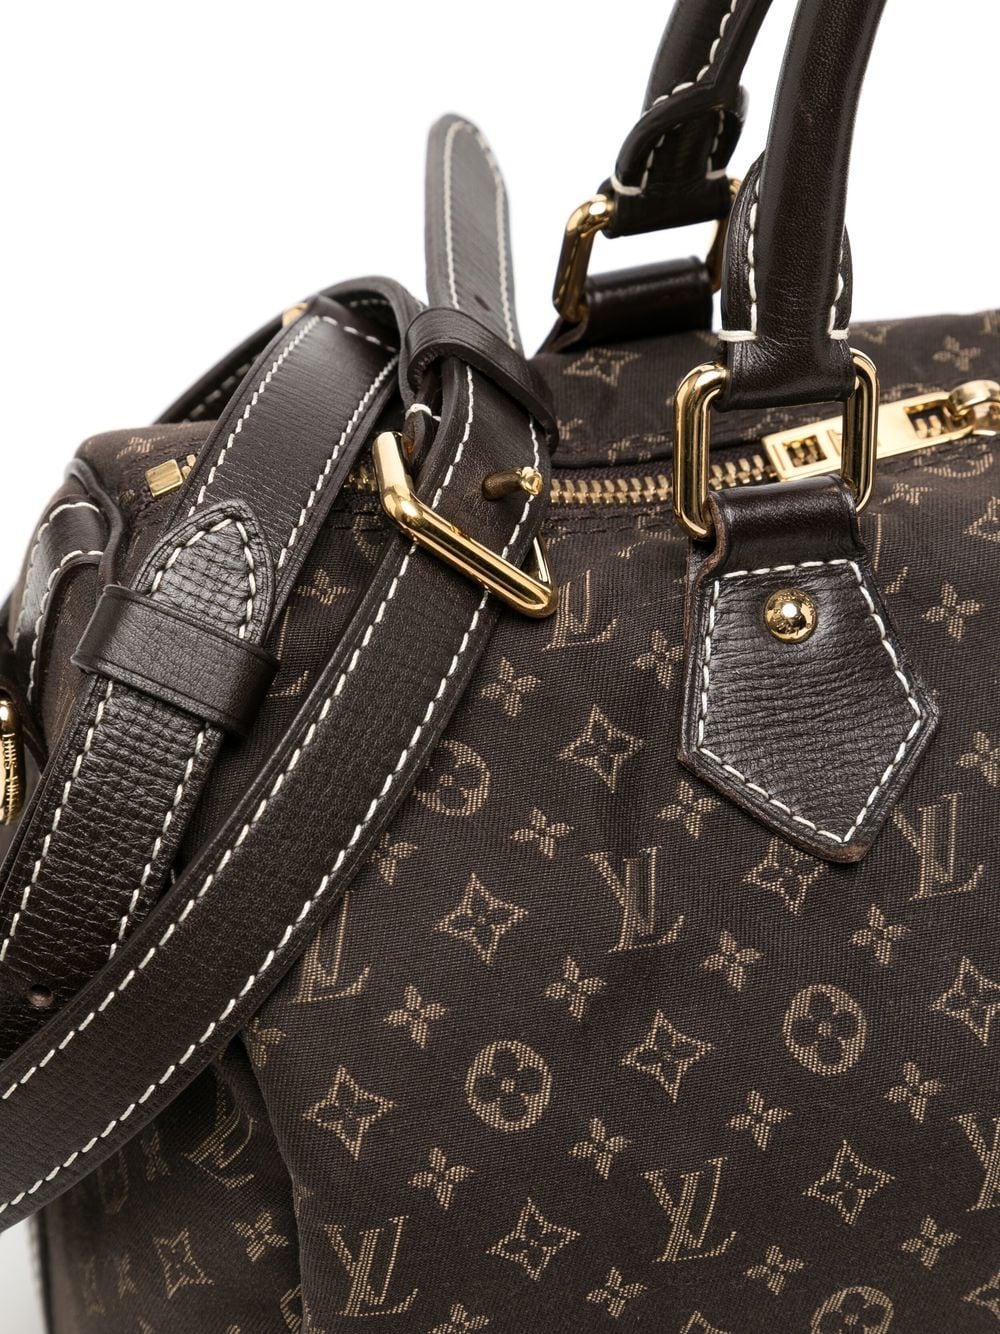 Louis Vuitton 2011 Pre-owned Monogram Speedy 30 Handbag